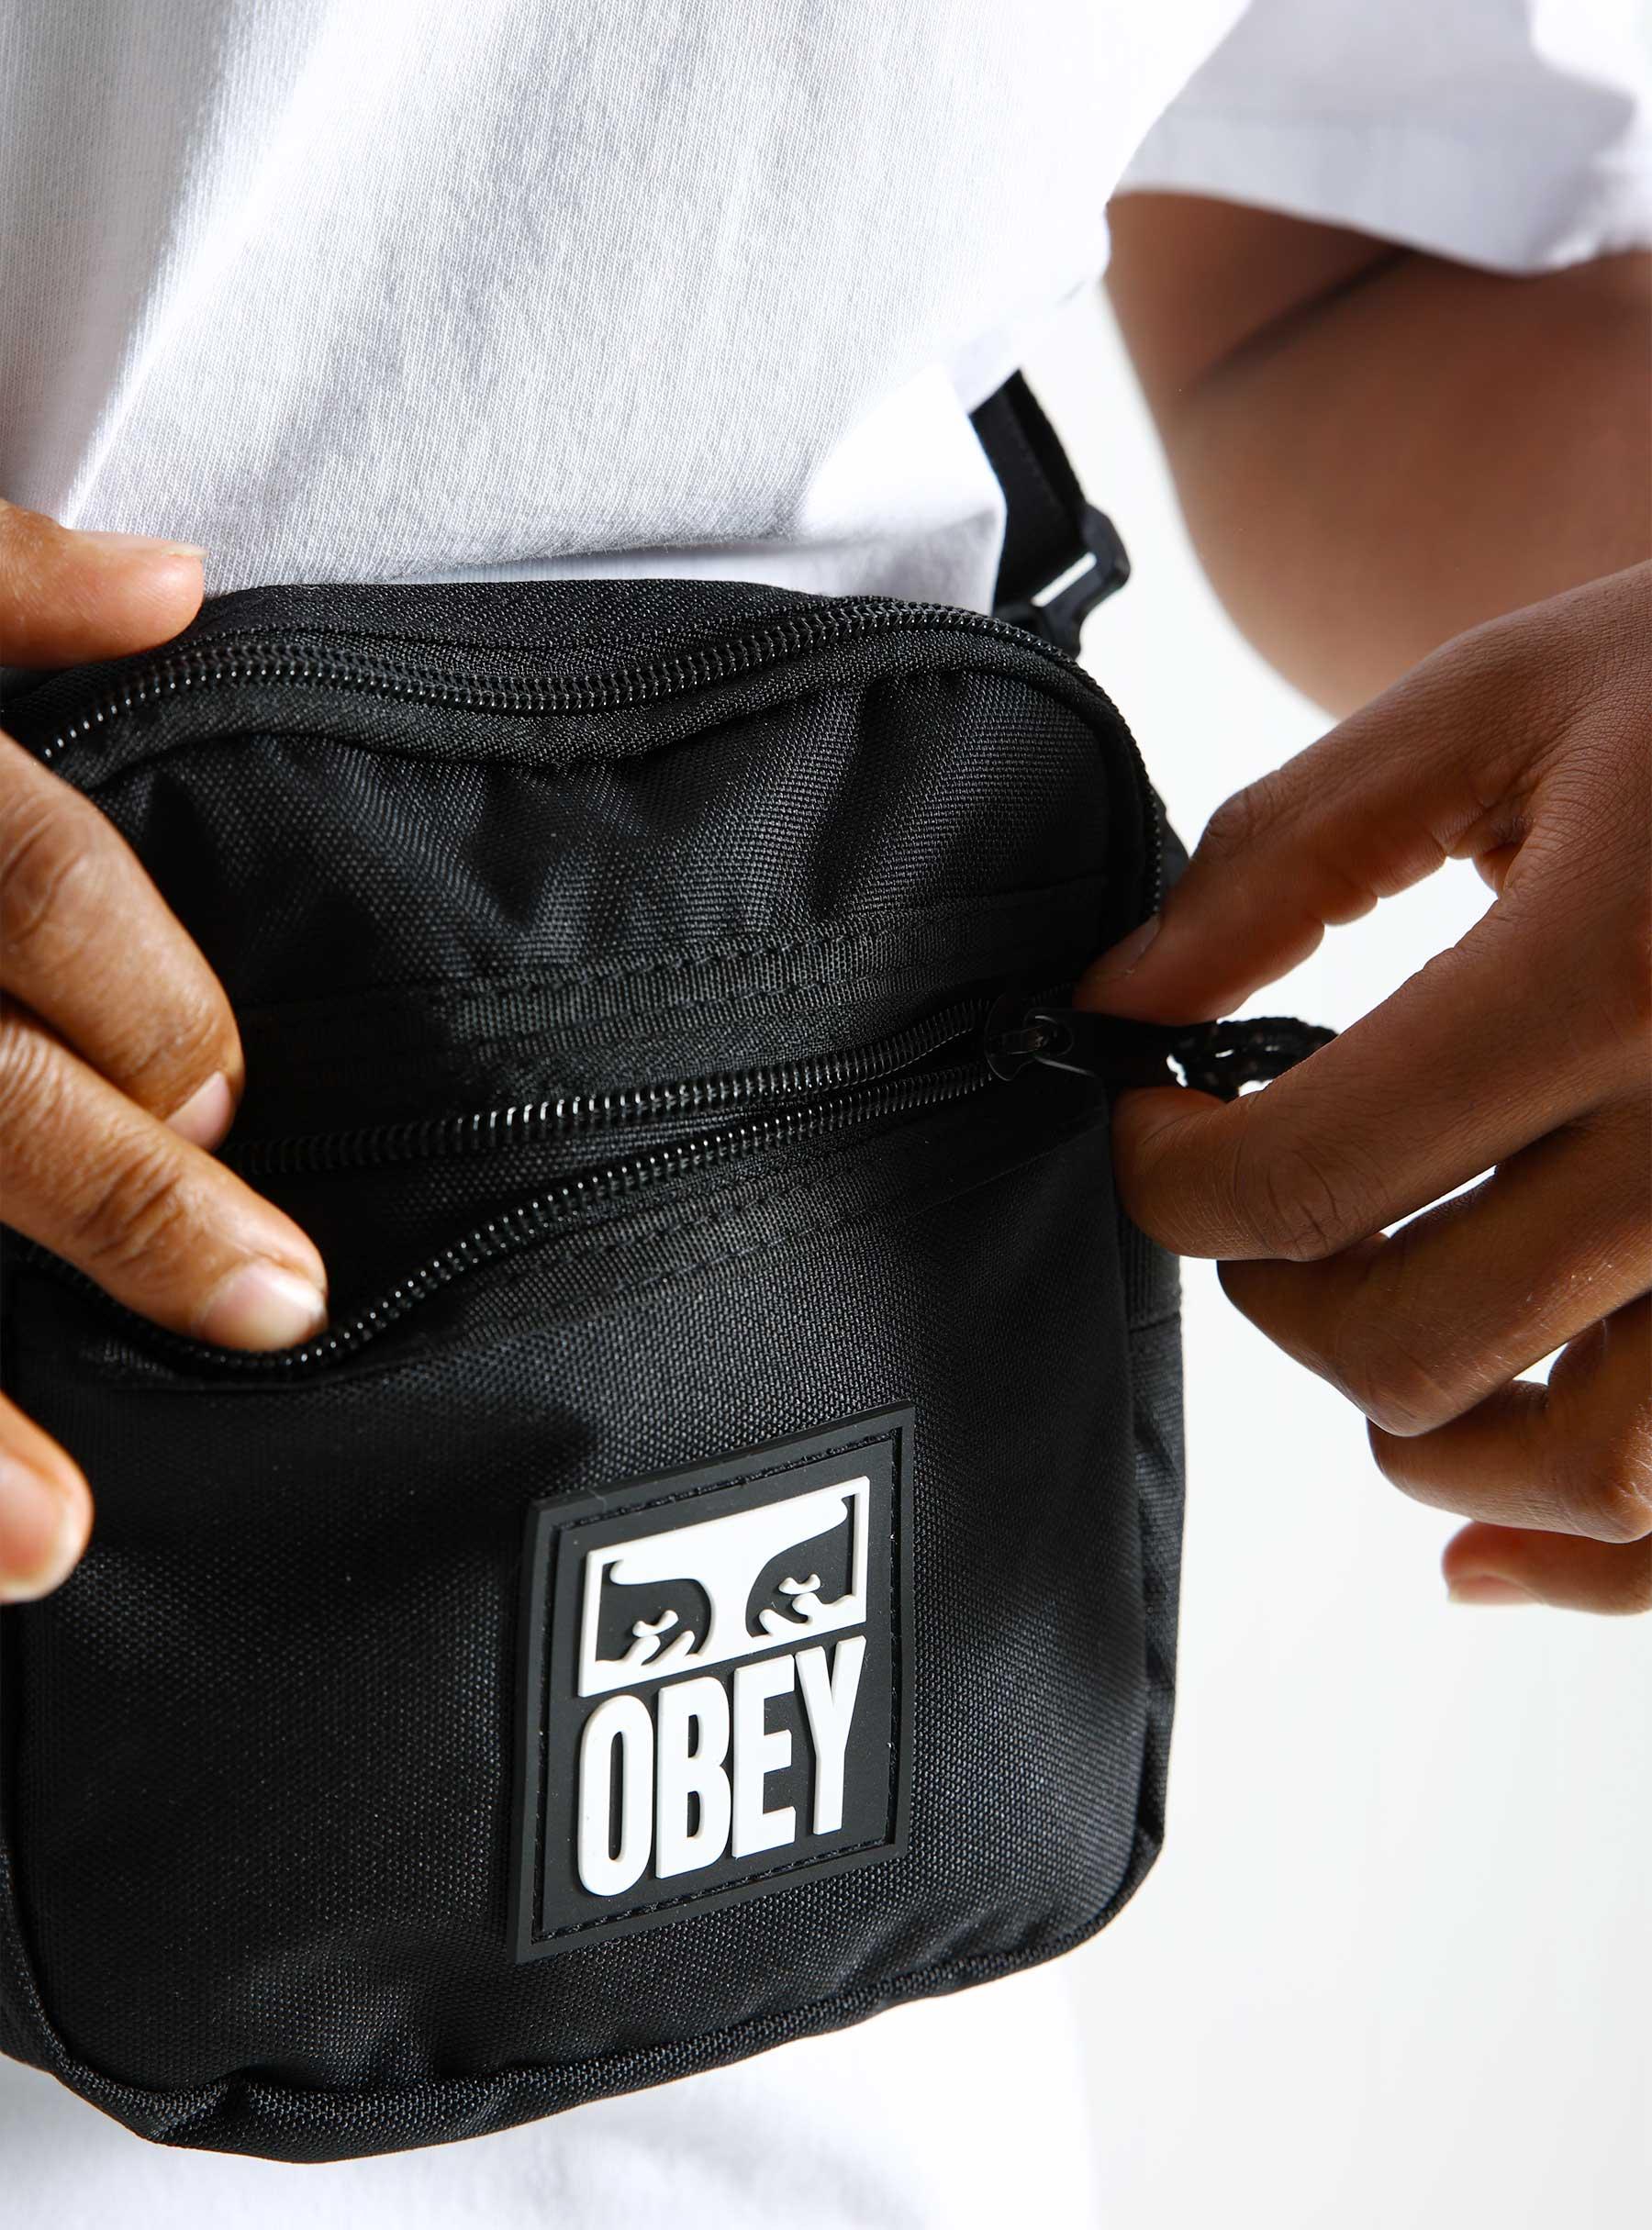 Obey Small Messenger Bag Black 100010150-BLK